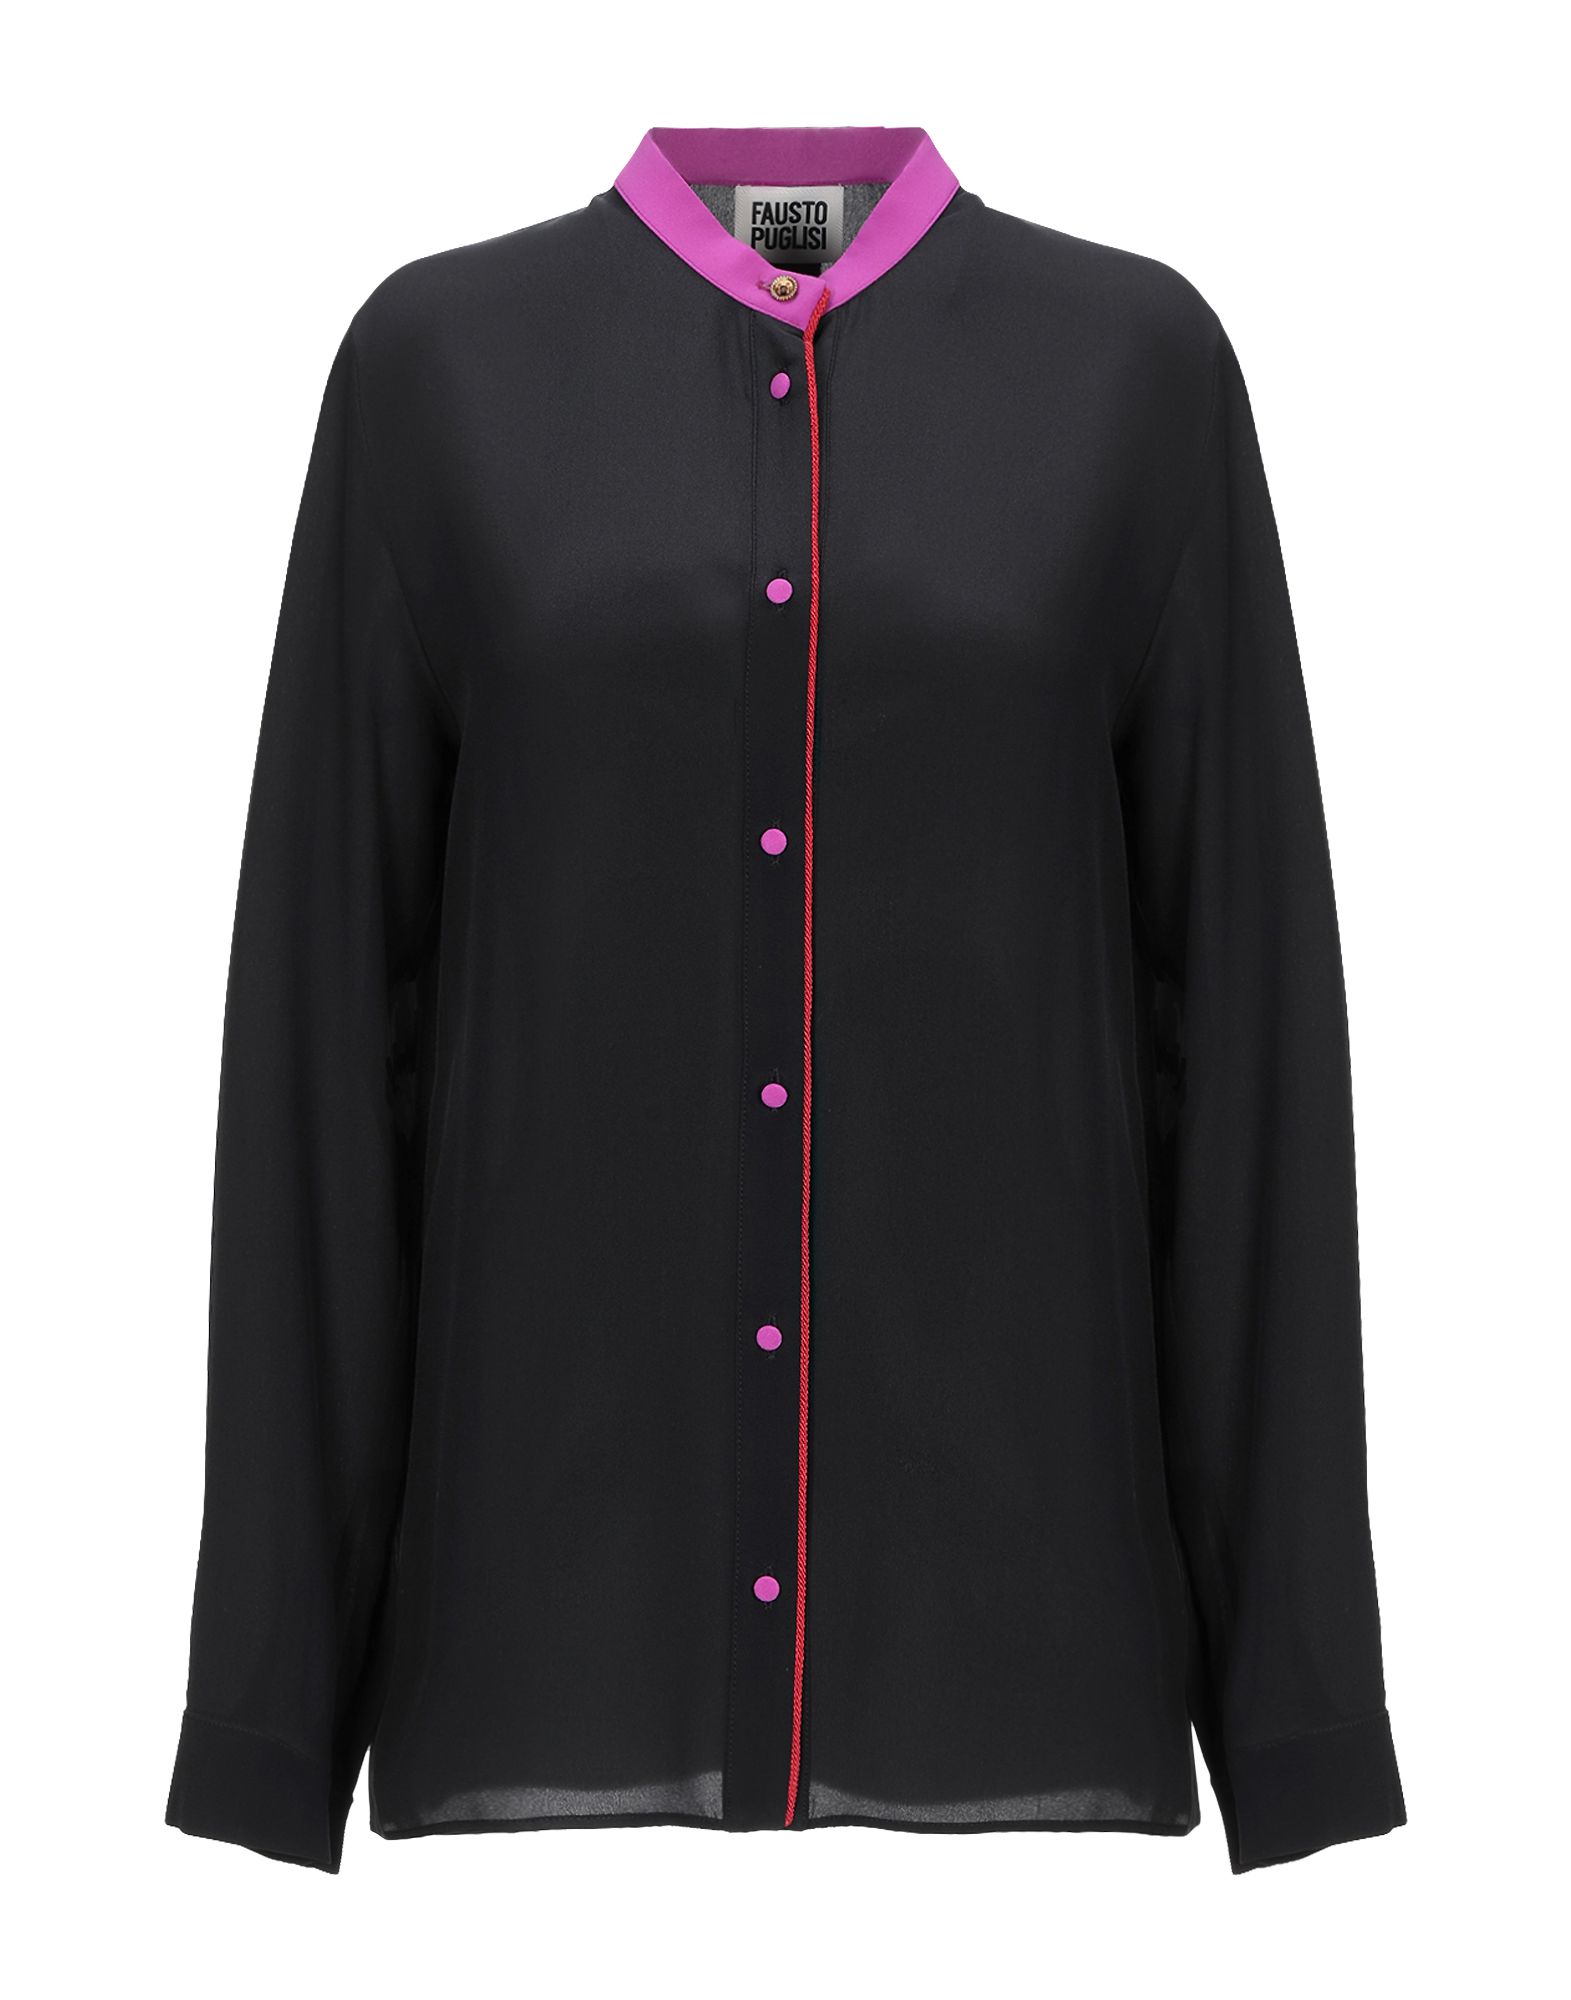 FAUSTO PUGLISI Silk shirts & blouses,38743616UE 4